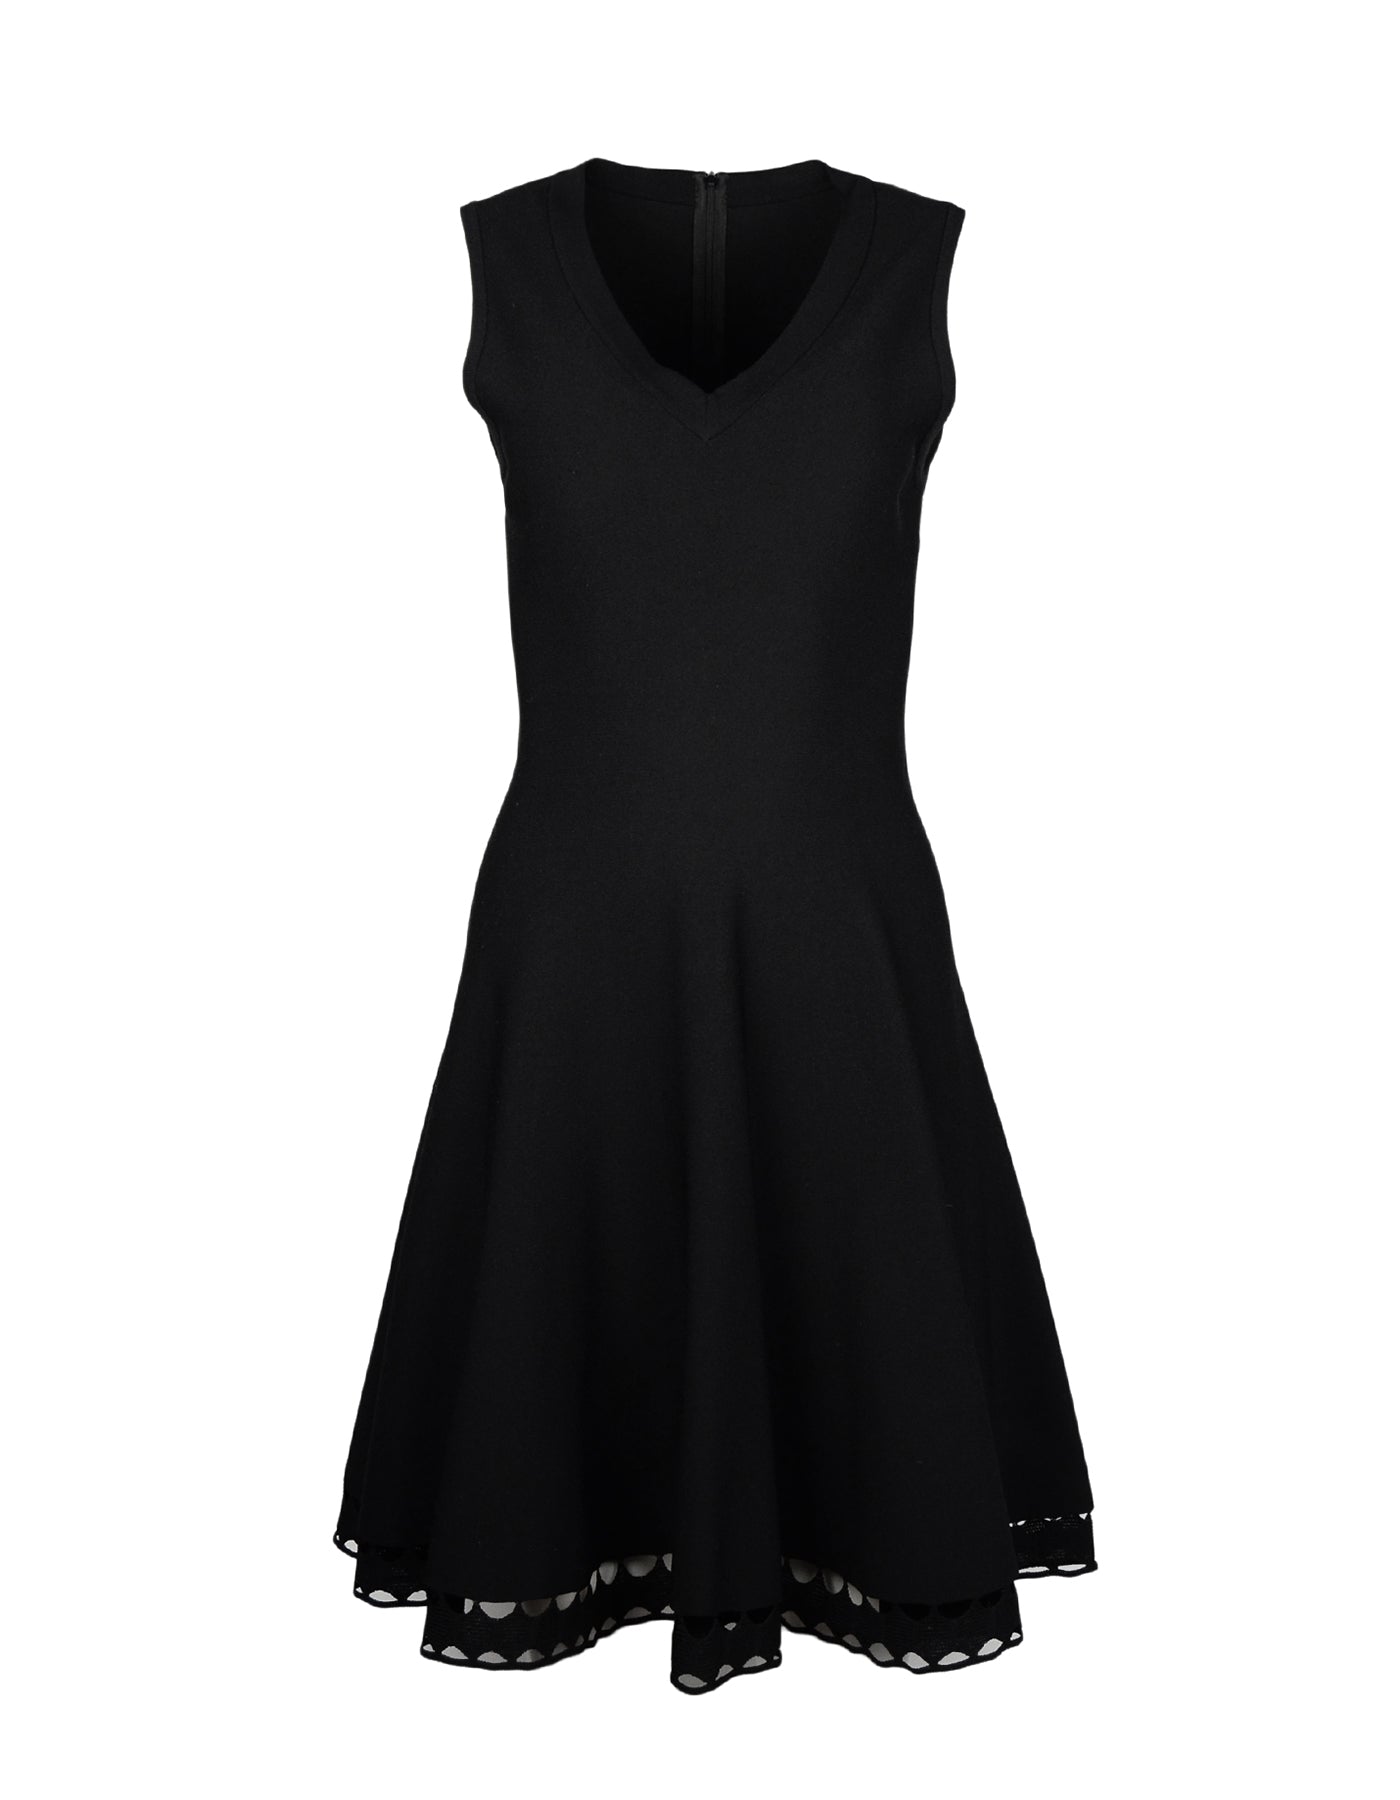 Alaia Black Fit & Flare V Neck Sleeveless Dress W/ Crochet Hem Sz FR42